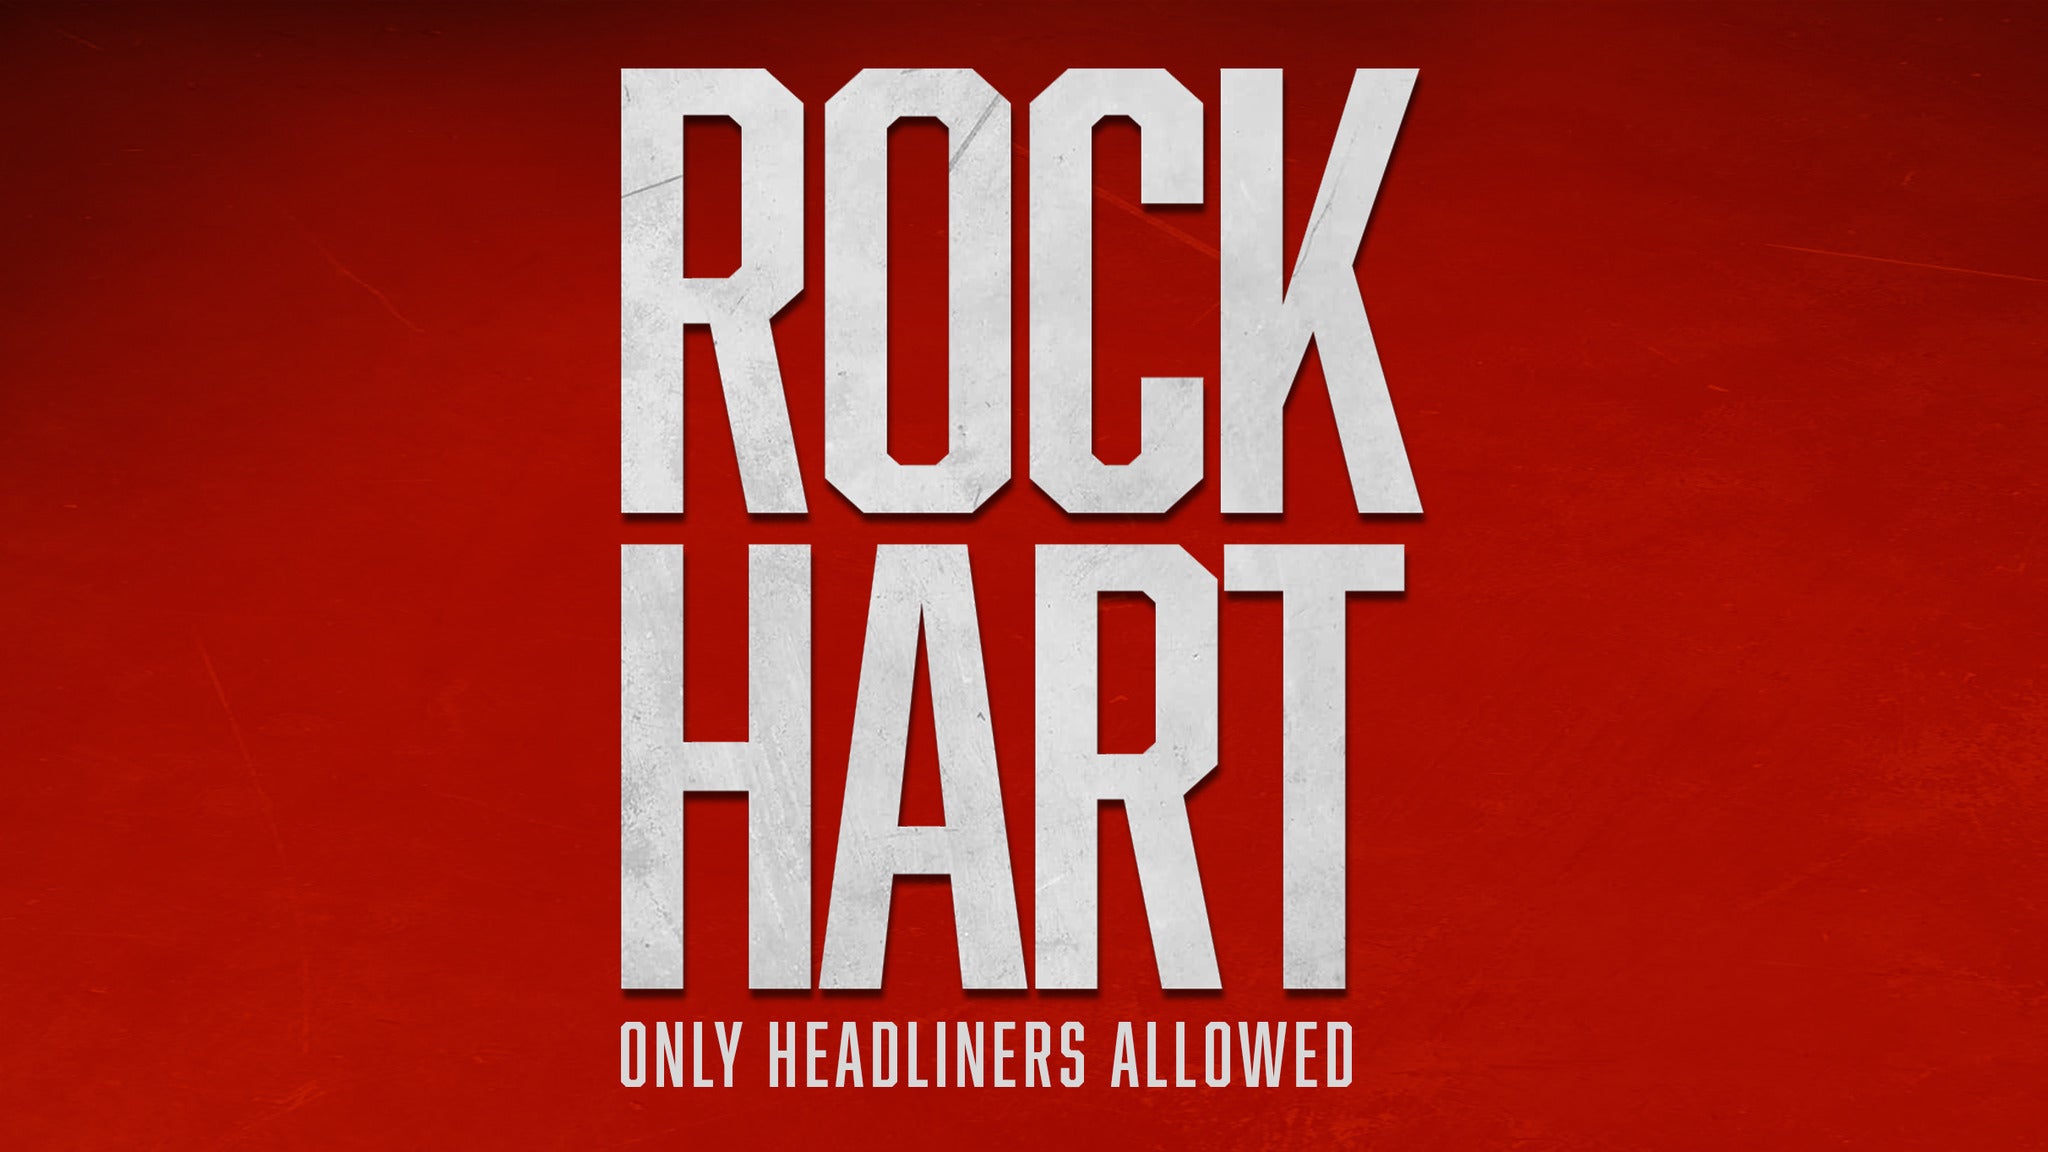 Rock Hart: Only Headliners Allowed